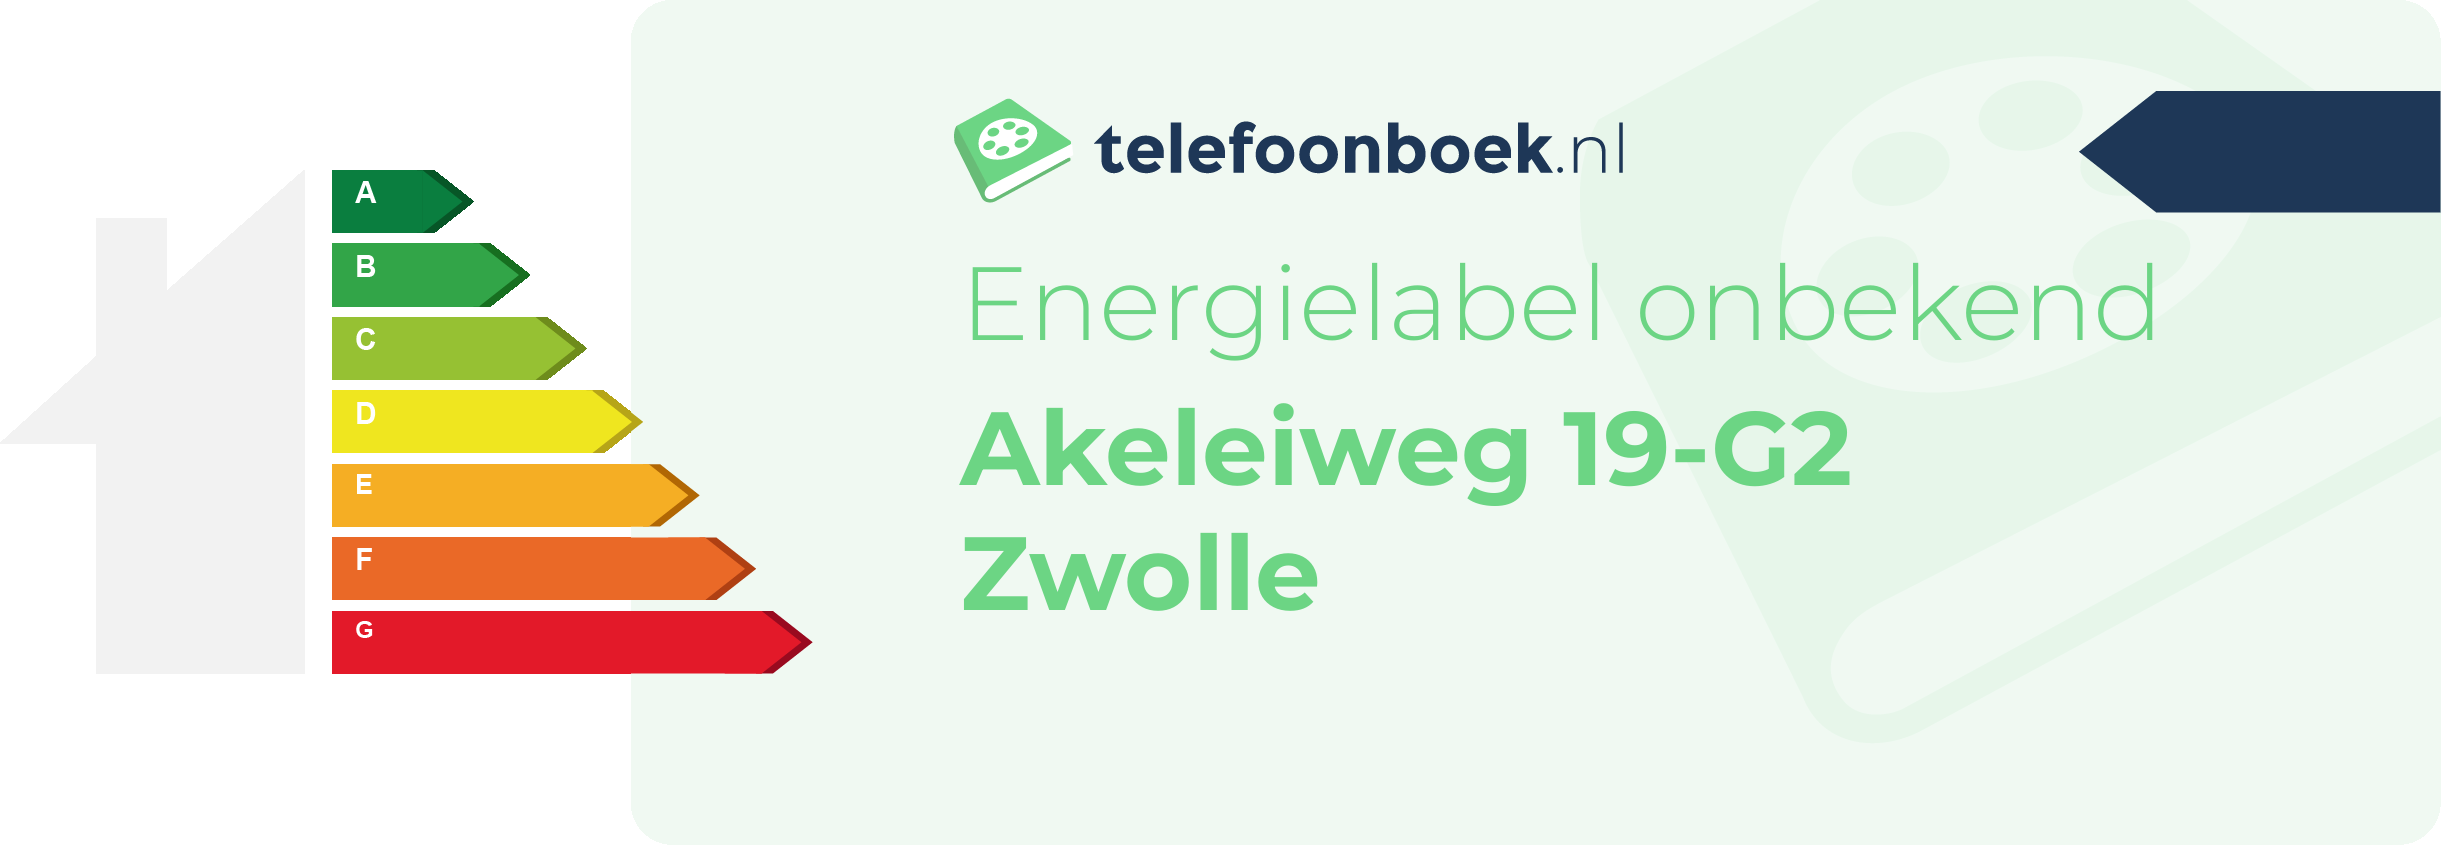 Energielabel Akeleiweg 19-G2 Zwolle